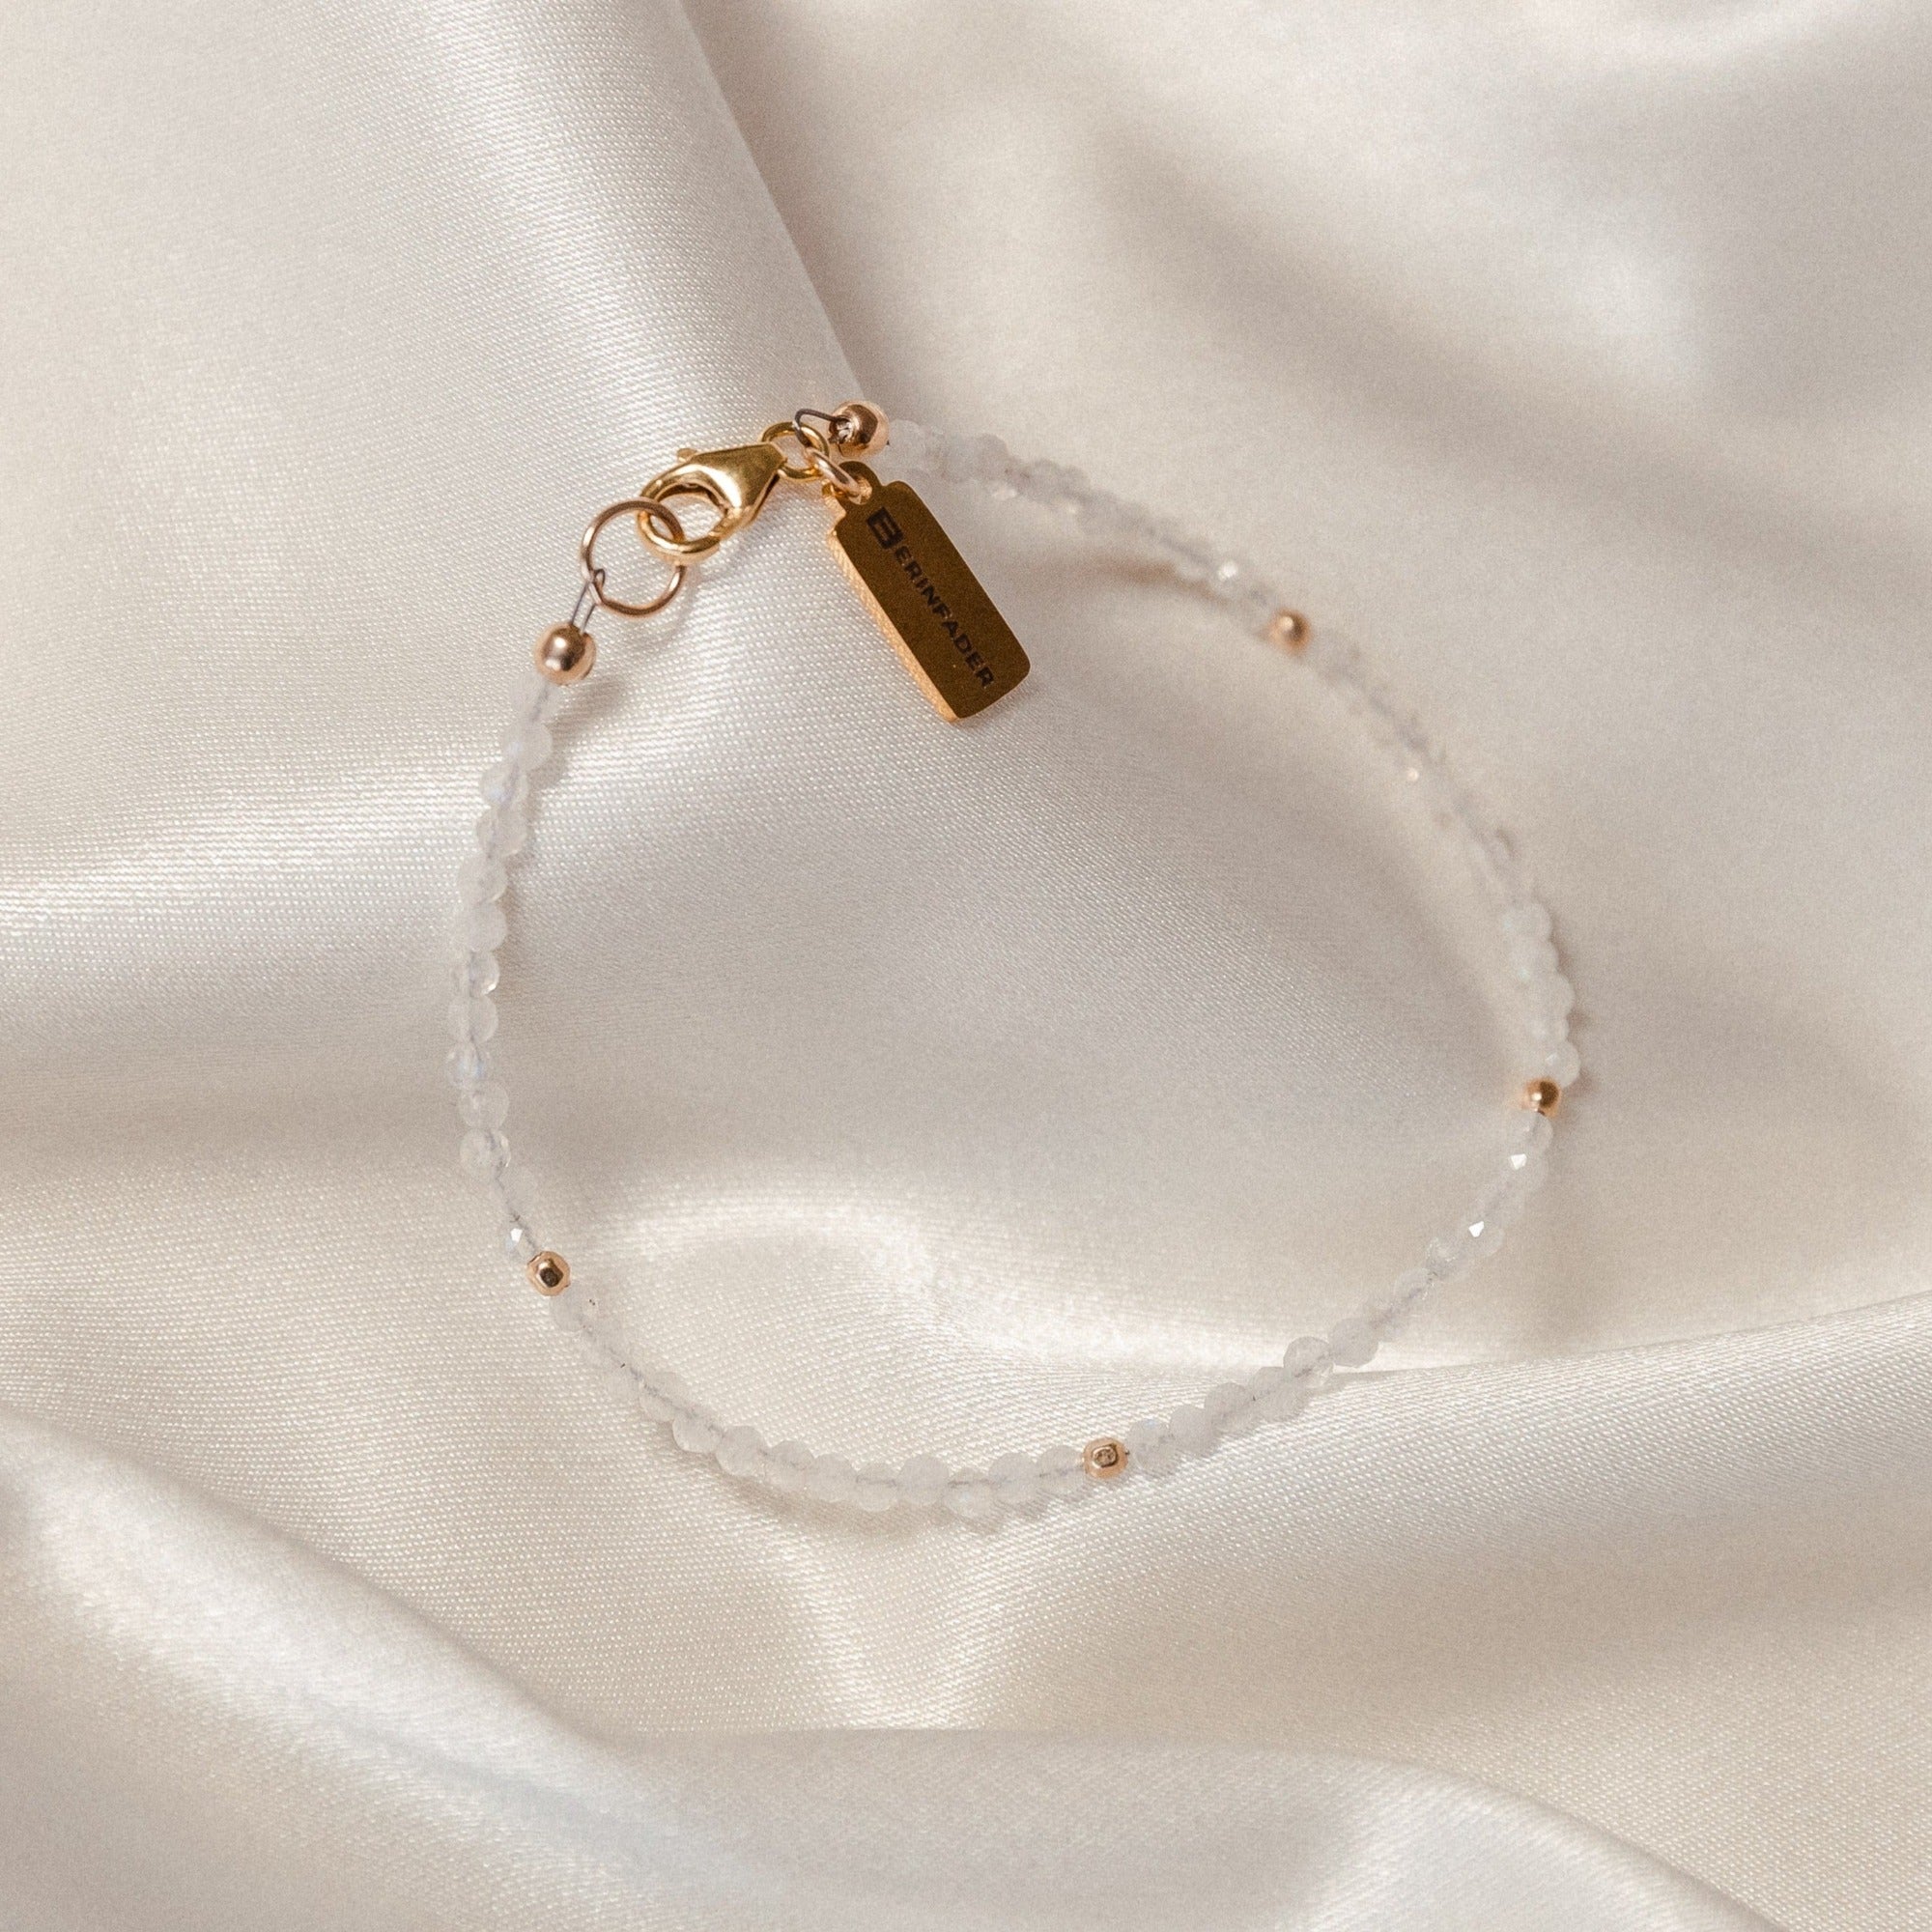 Moonstone Beaded Gemstone Bracelet by Erin Fader Jewelry